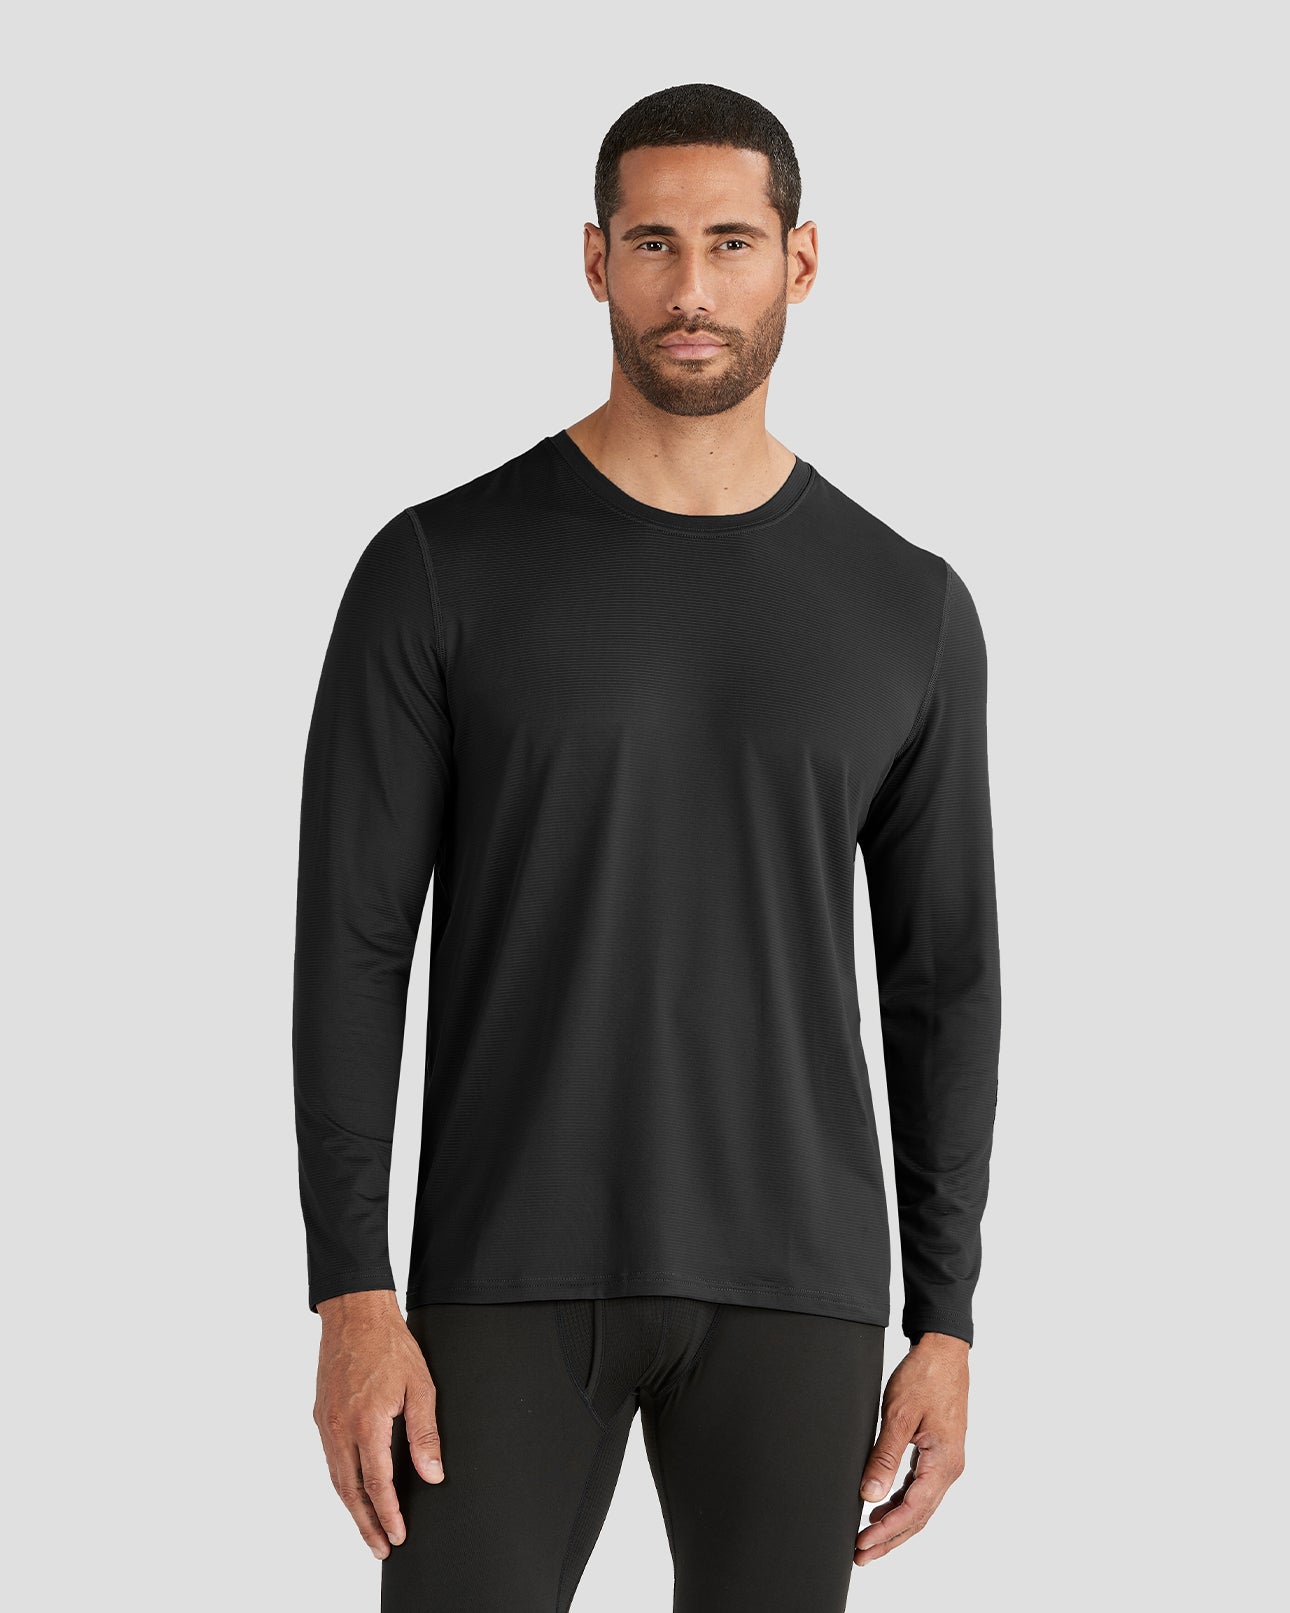 Men's Ventilator Performance Long-Sleeve Shirt